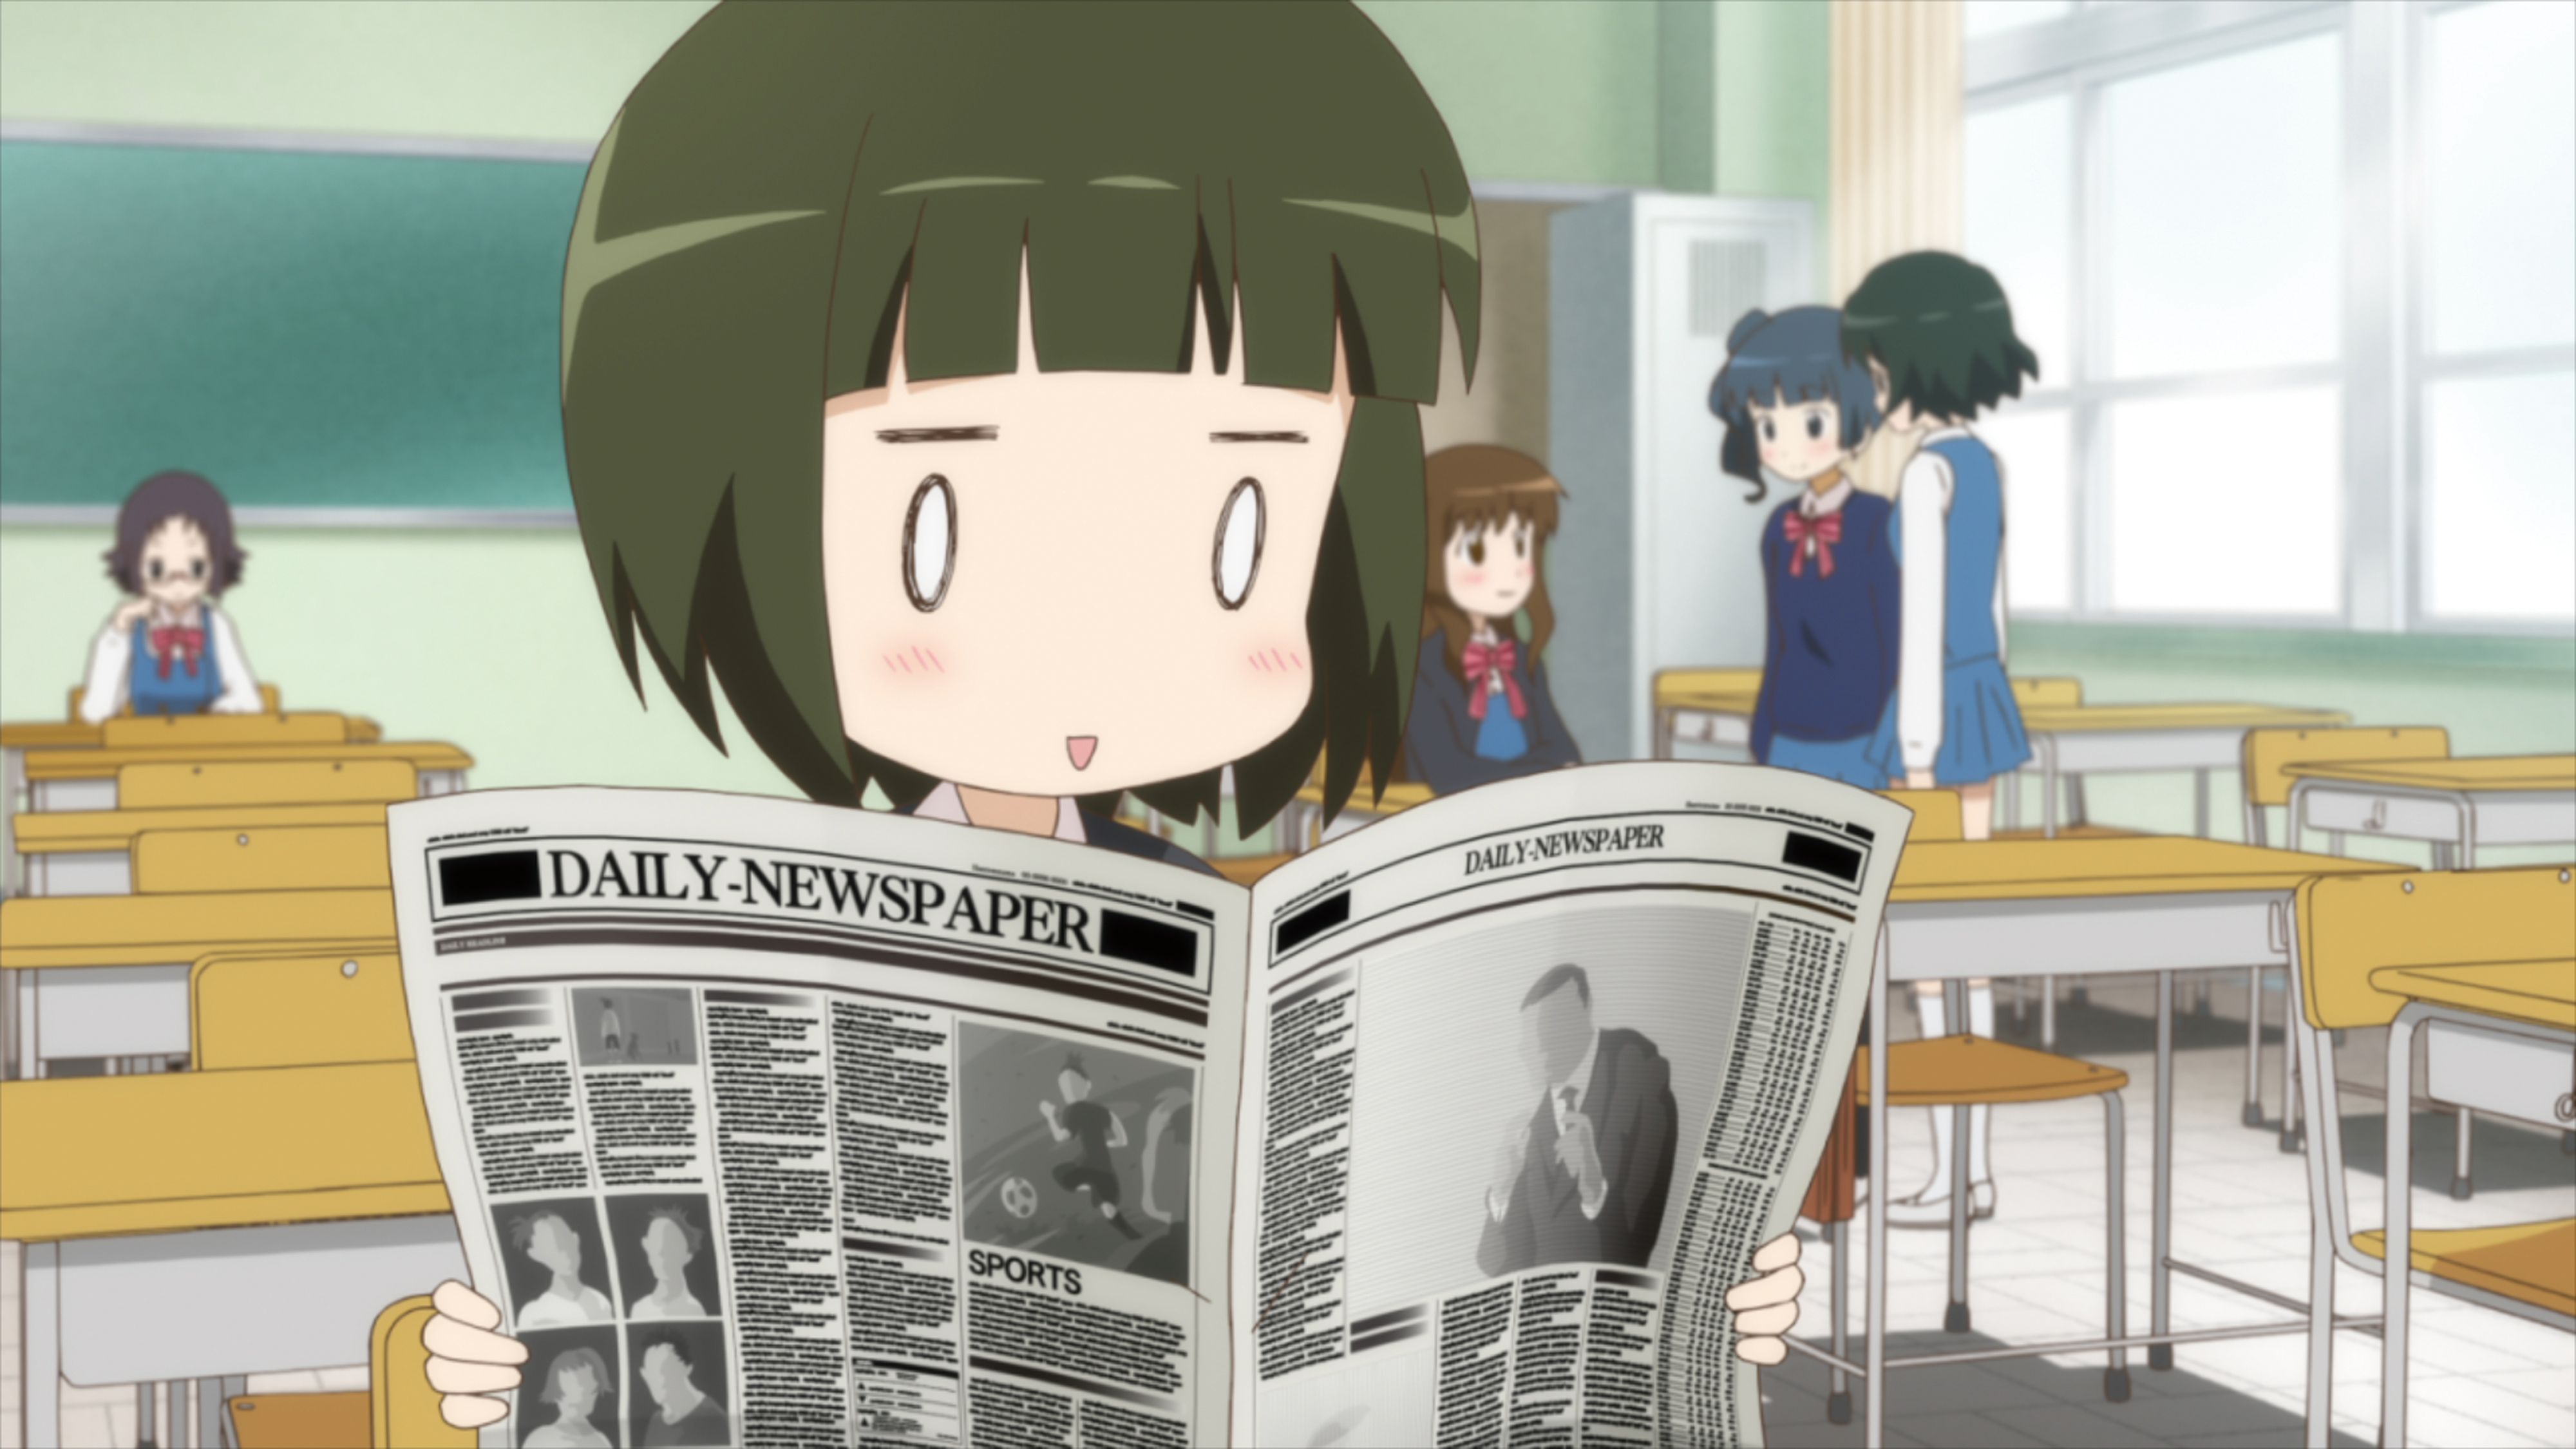 anime girl reading news paper image